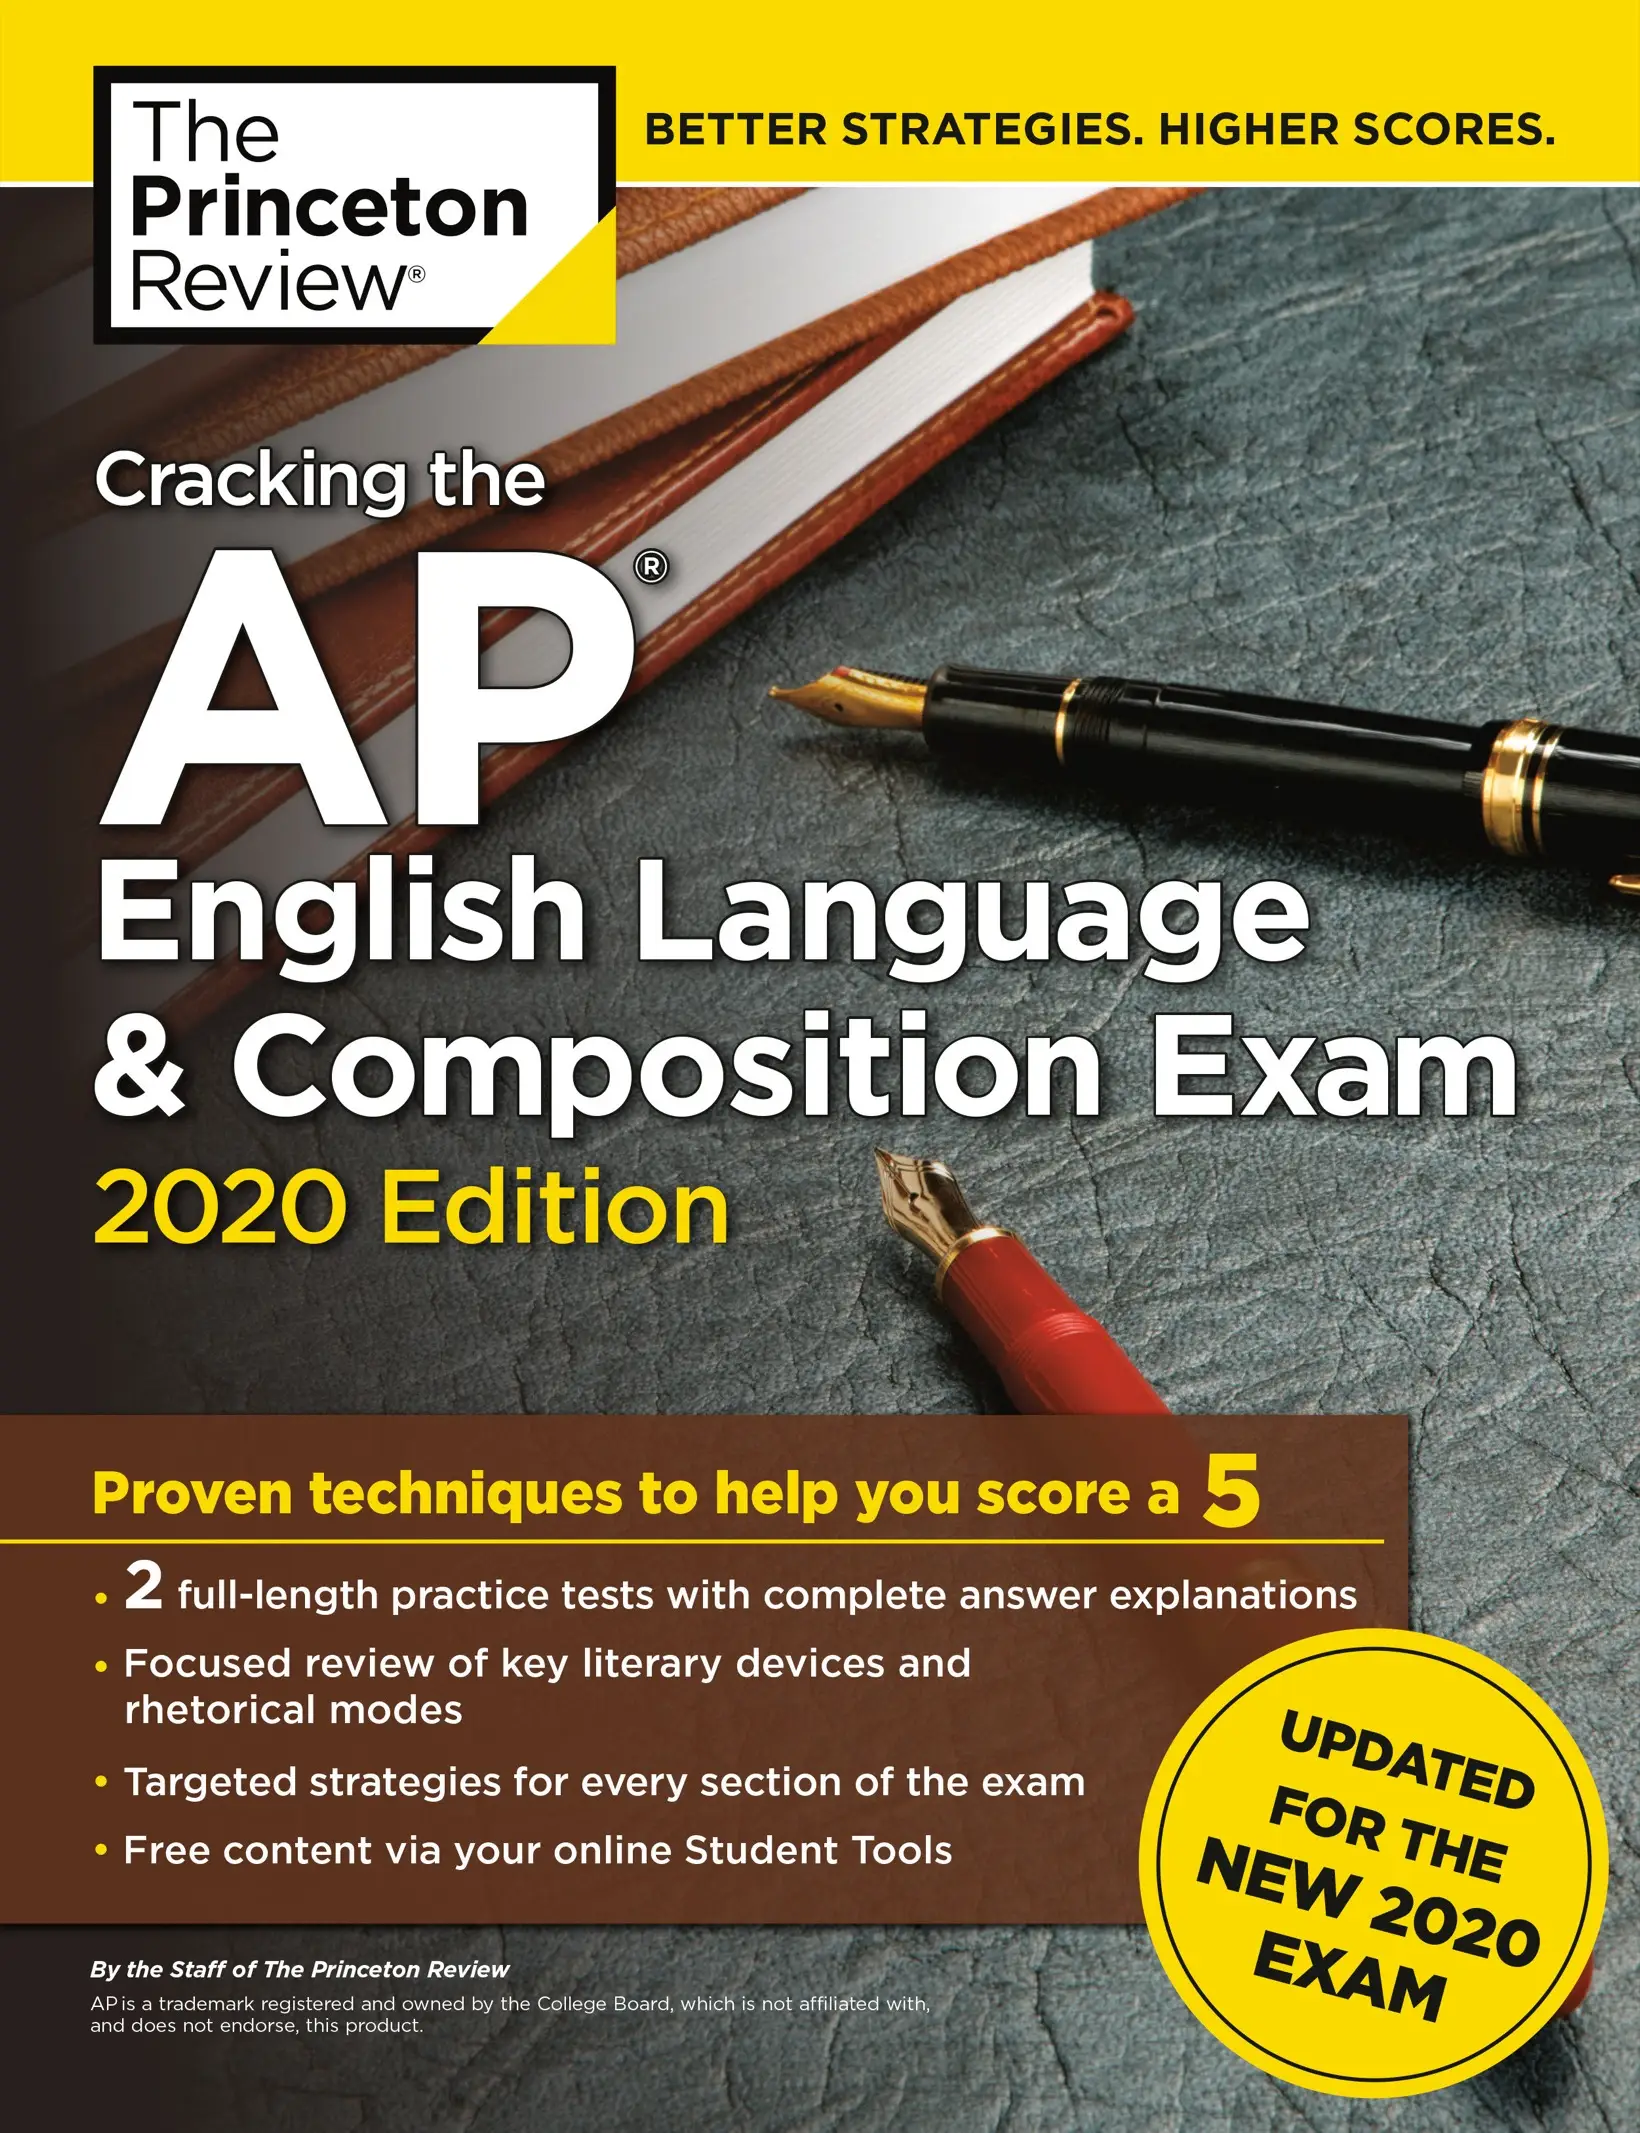 Cracking the AP English Language & Composition Exam, 2020 Edition